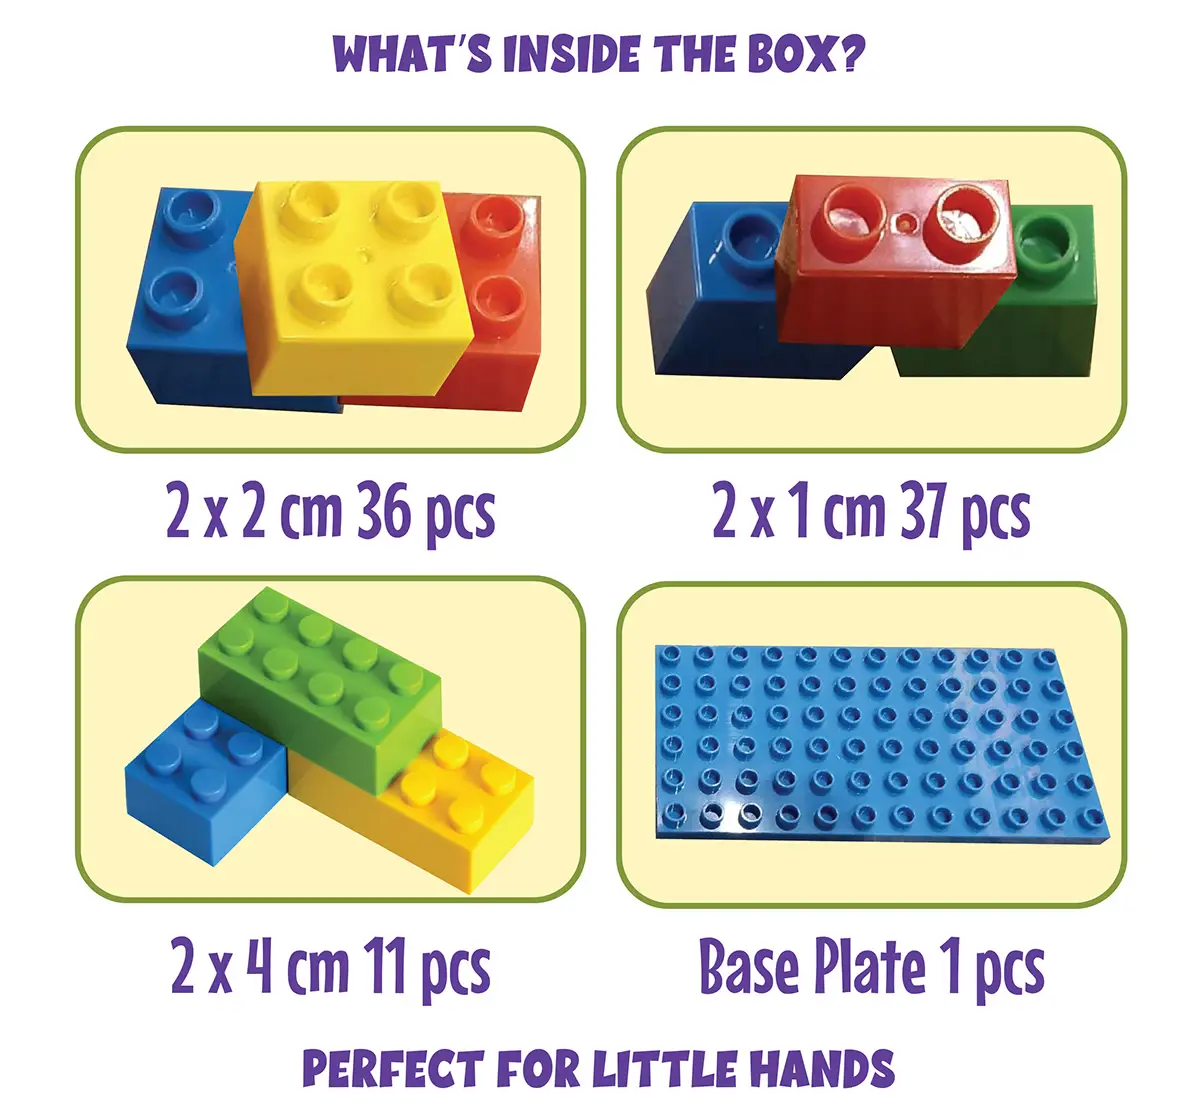 PlayMagic Building Blocks 85 Pieces For Kids of Age 3Y+, Multicolour